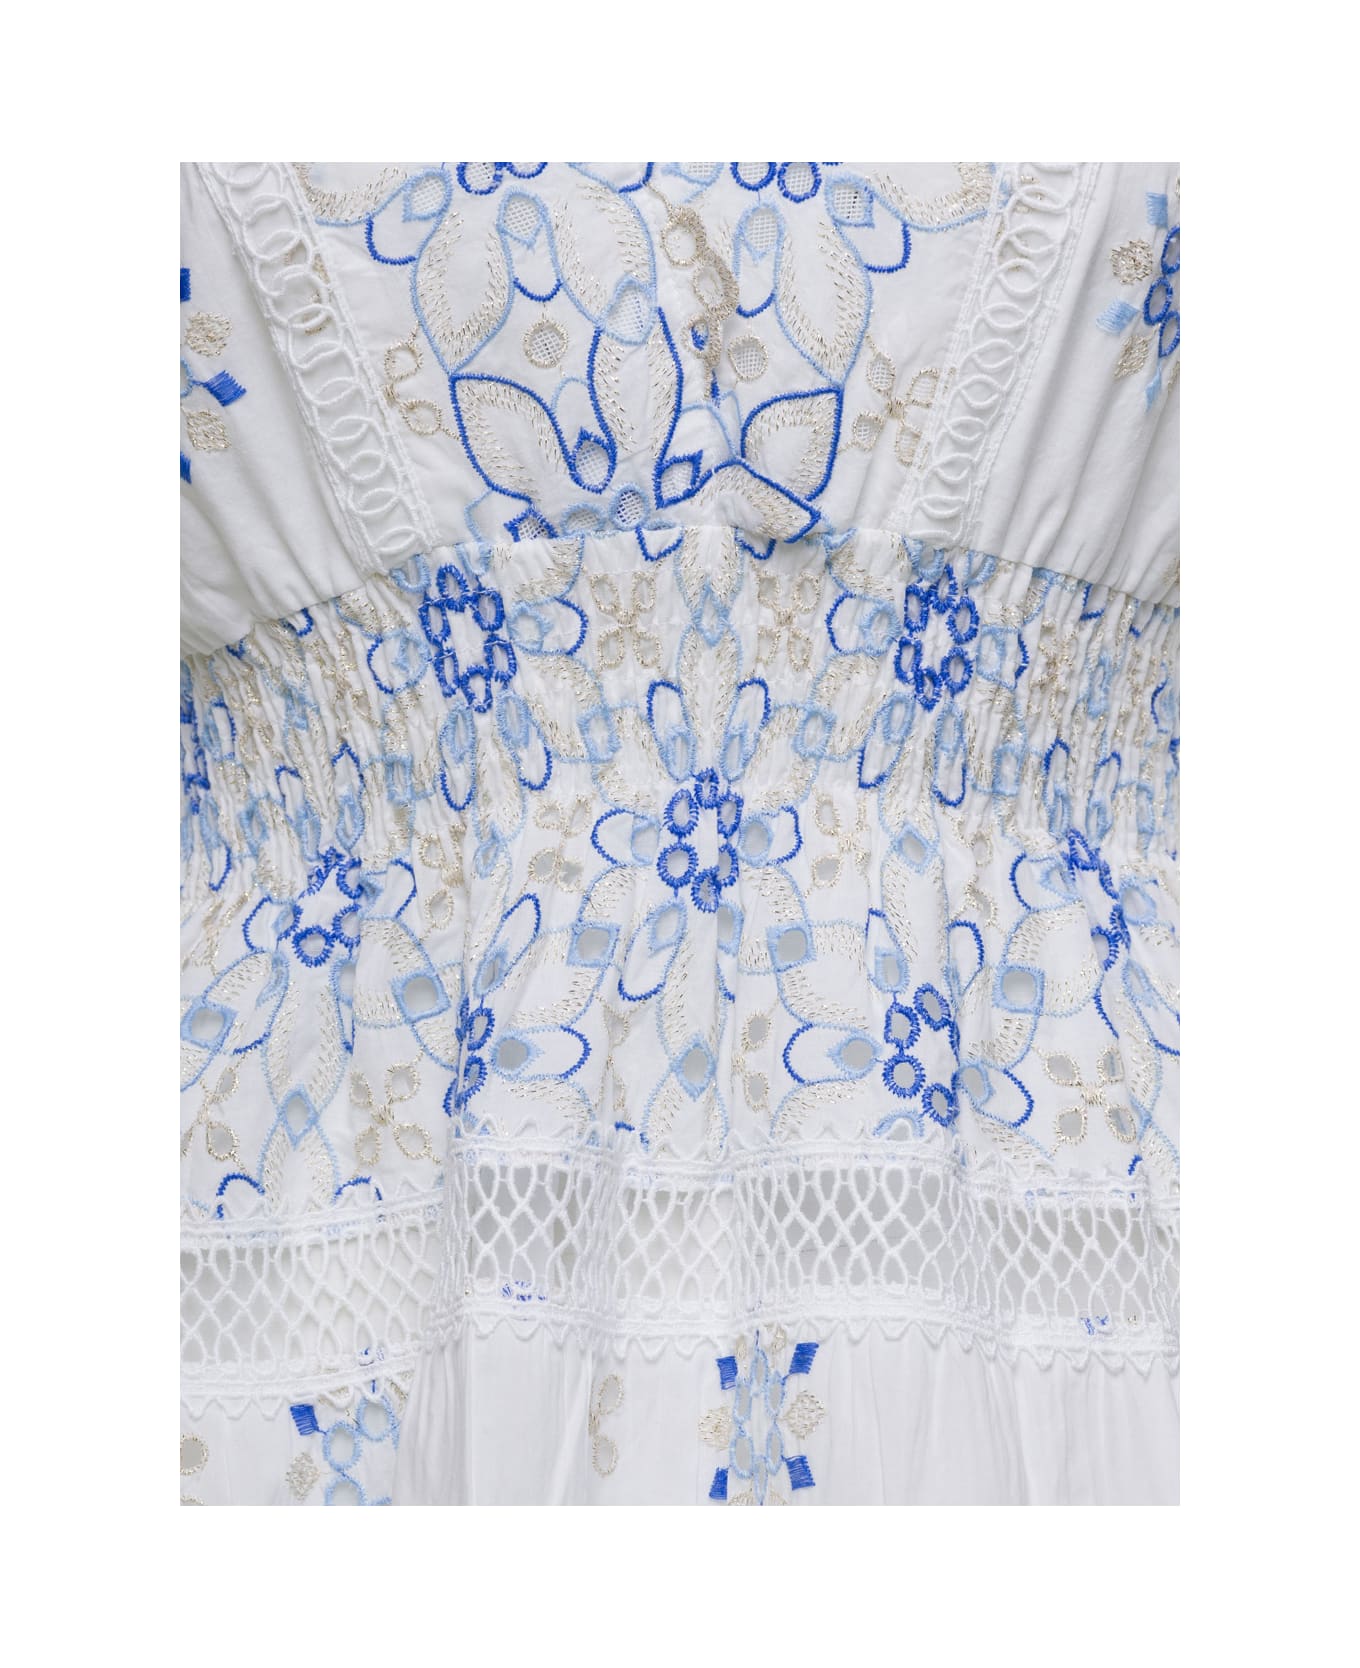 Temptation Positano Embroidered Dress - White